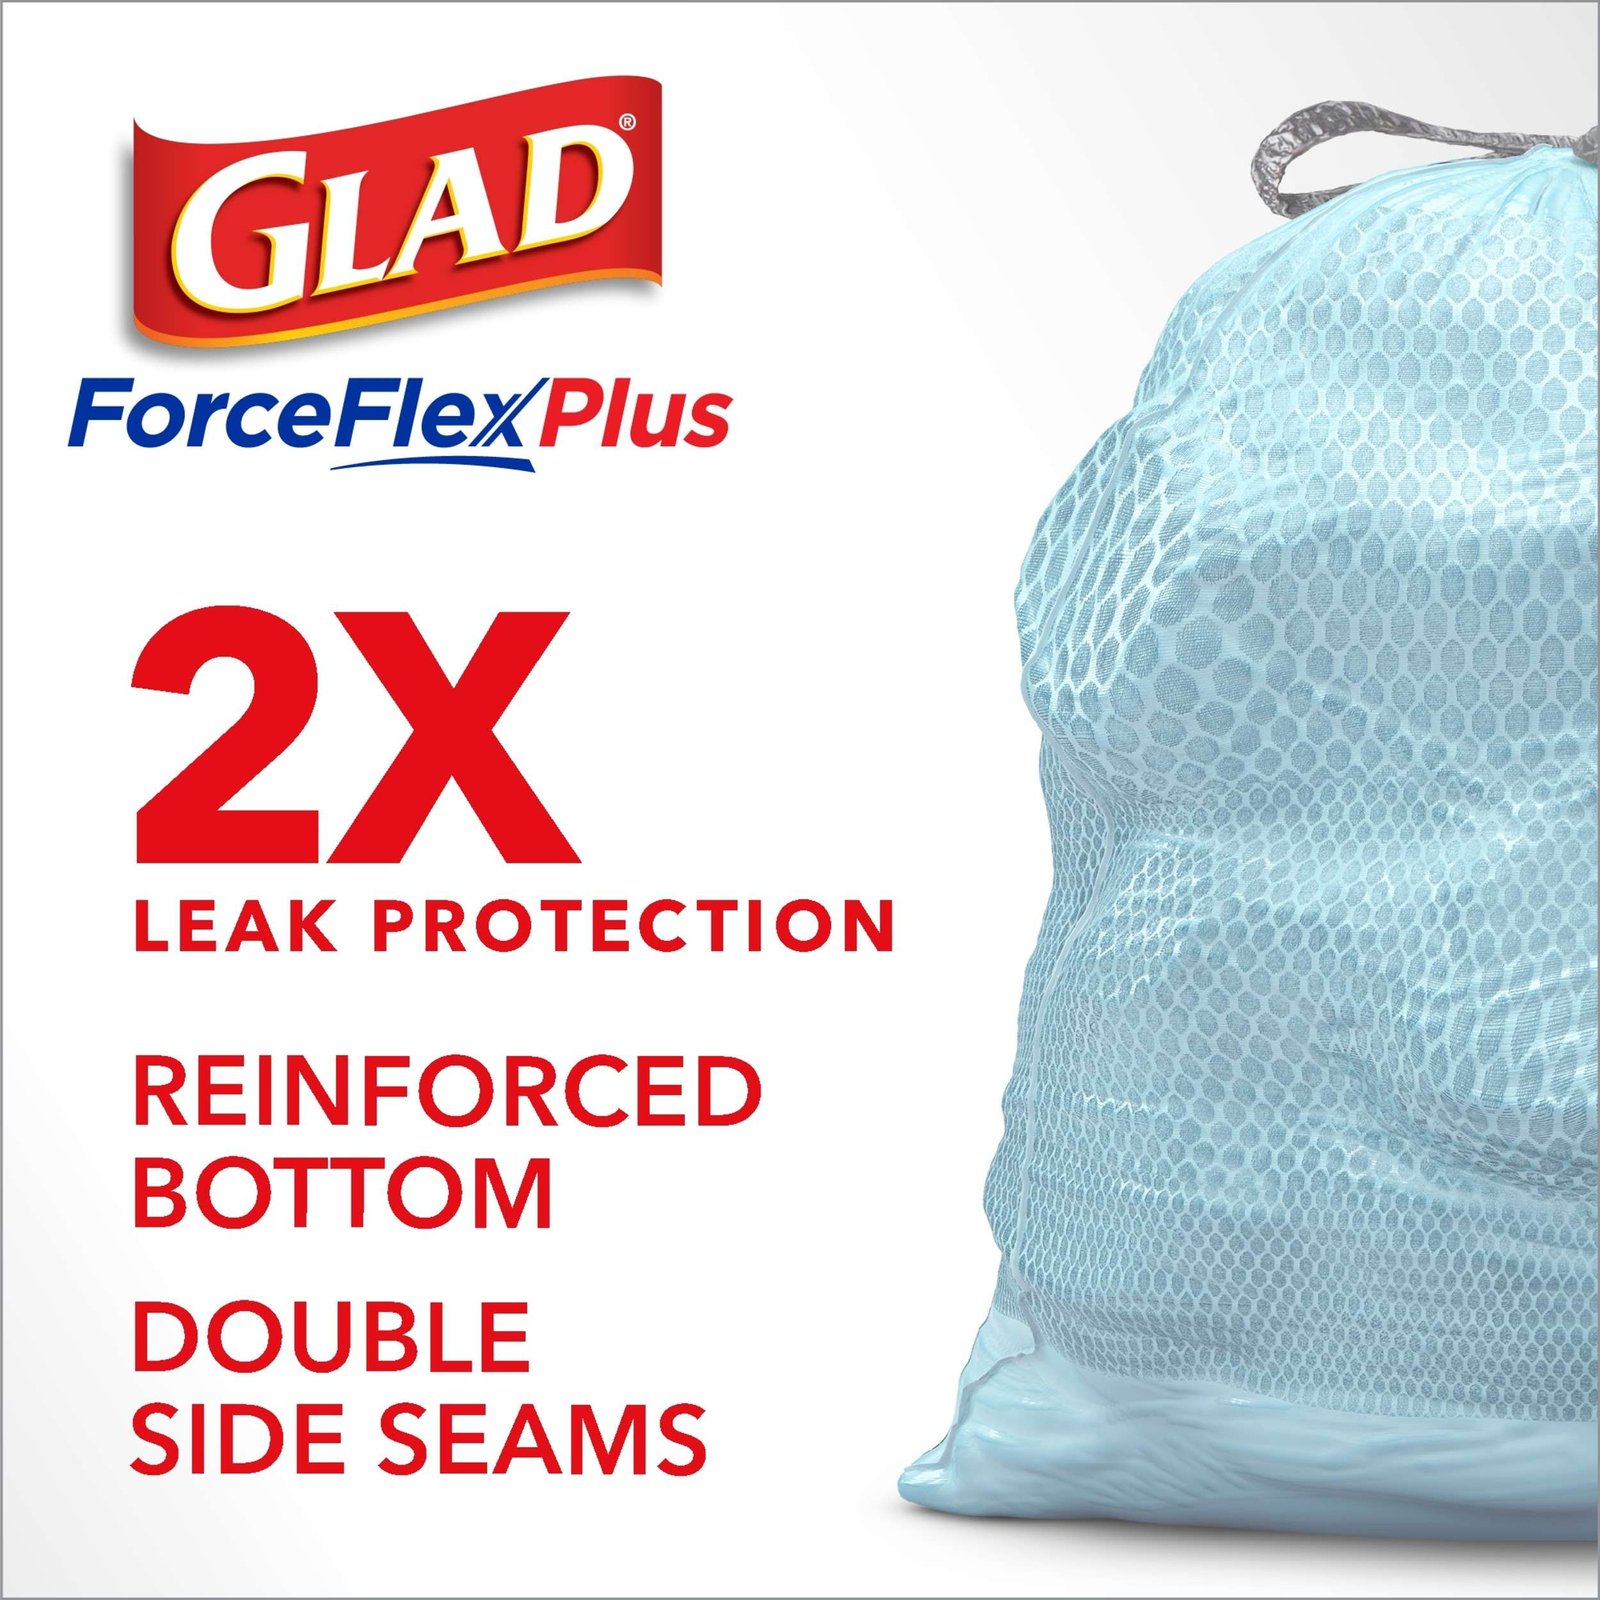 Glad ForceFlexPlus Tall Kitchen Trash Bags, 13 Gallon, 40 Bags (Beachside  Breeze Scent, Febreze Freshness) 